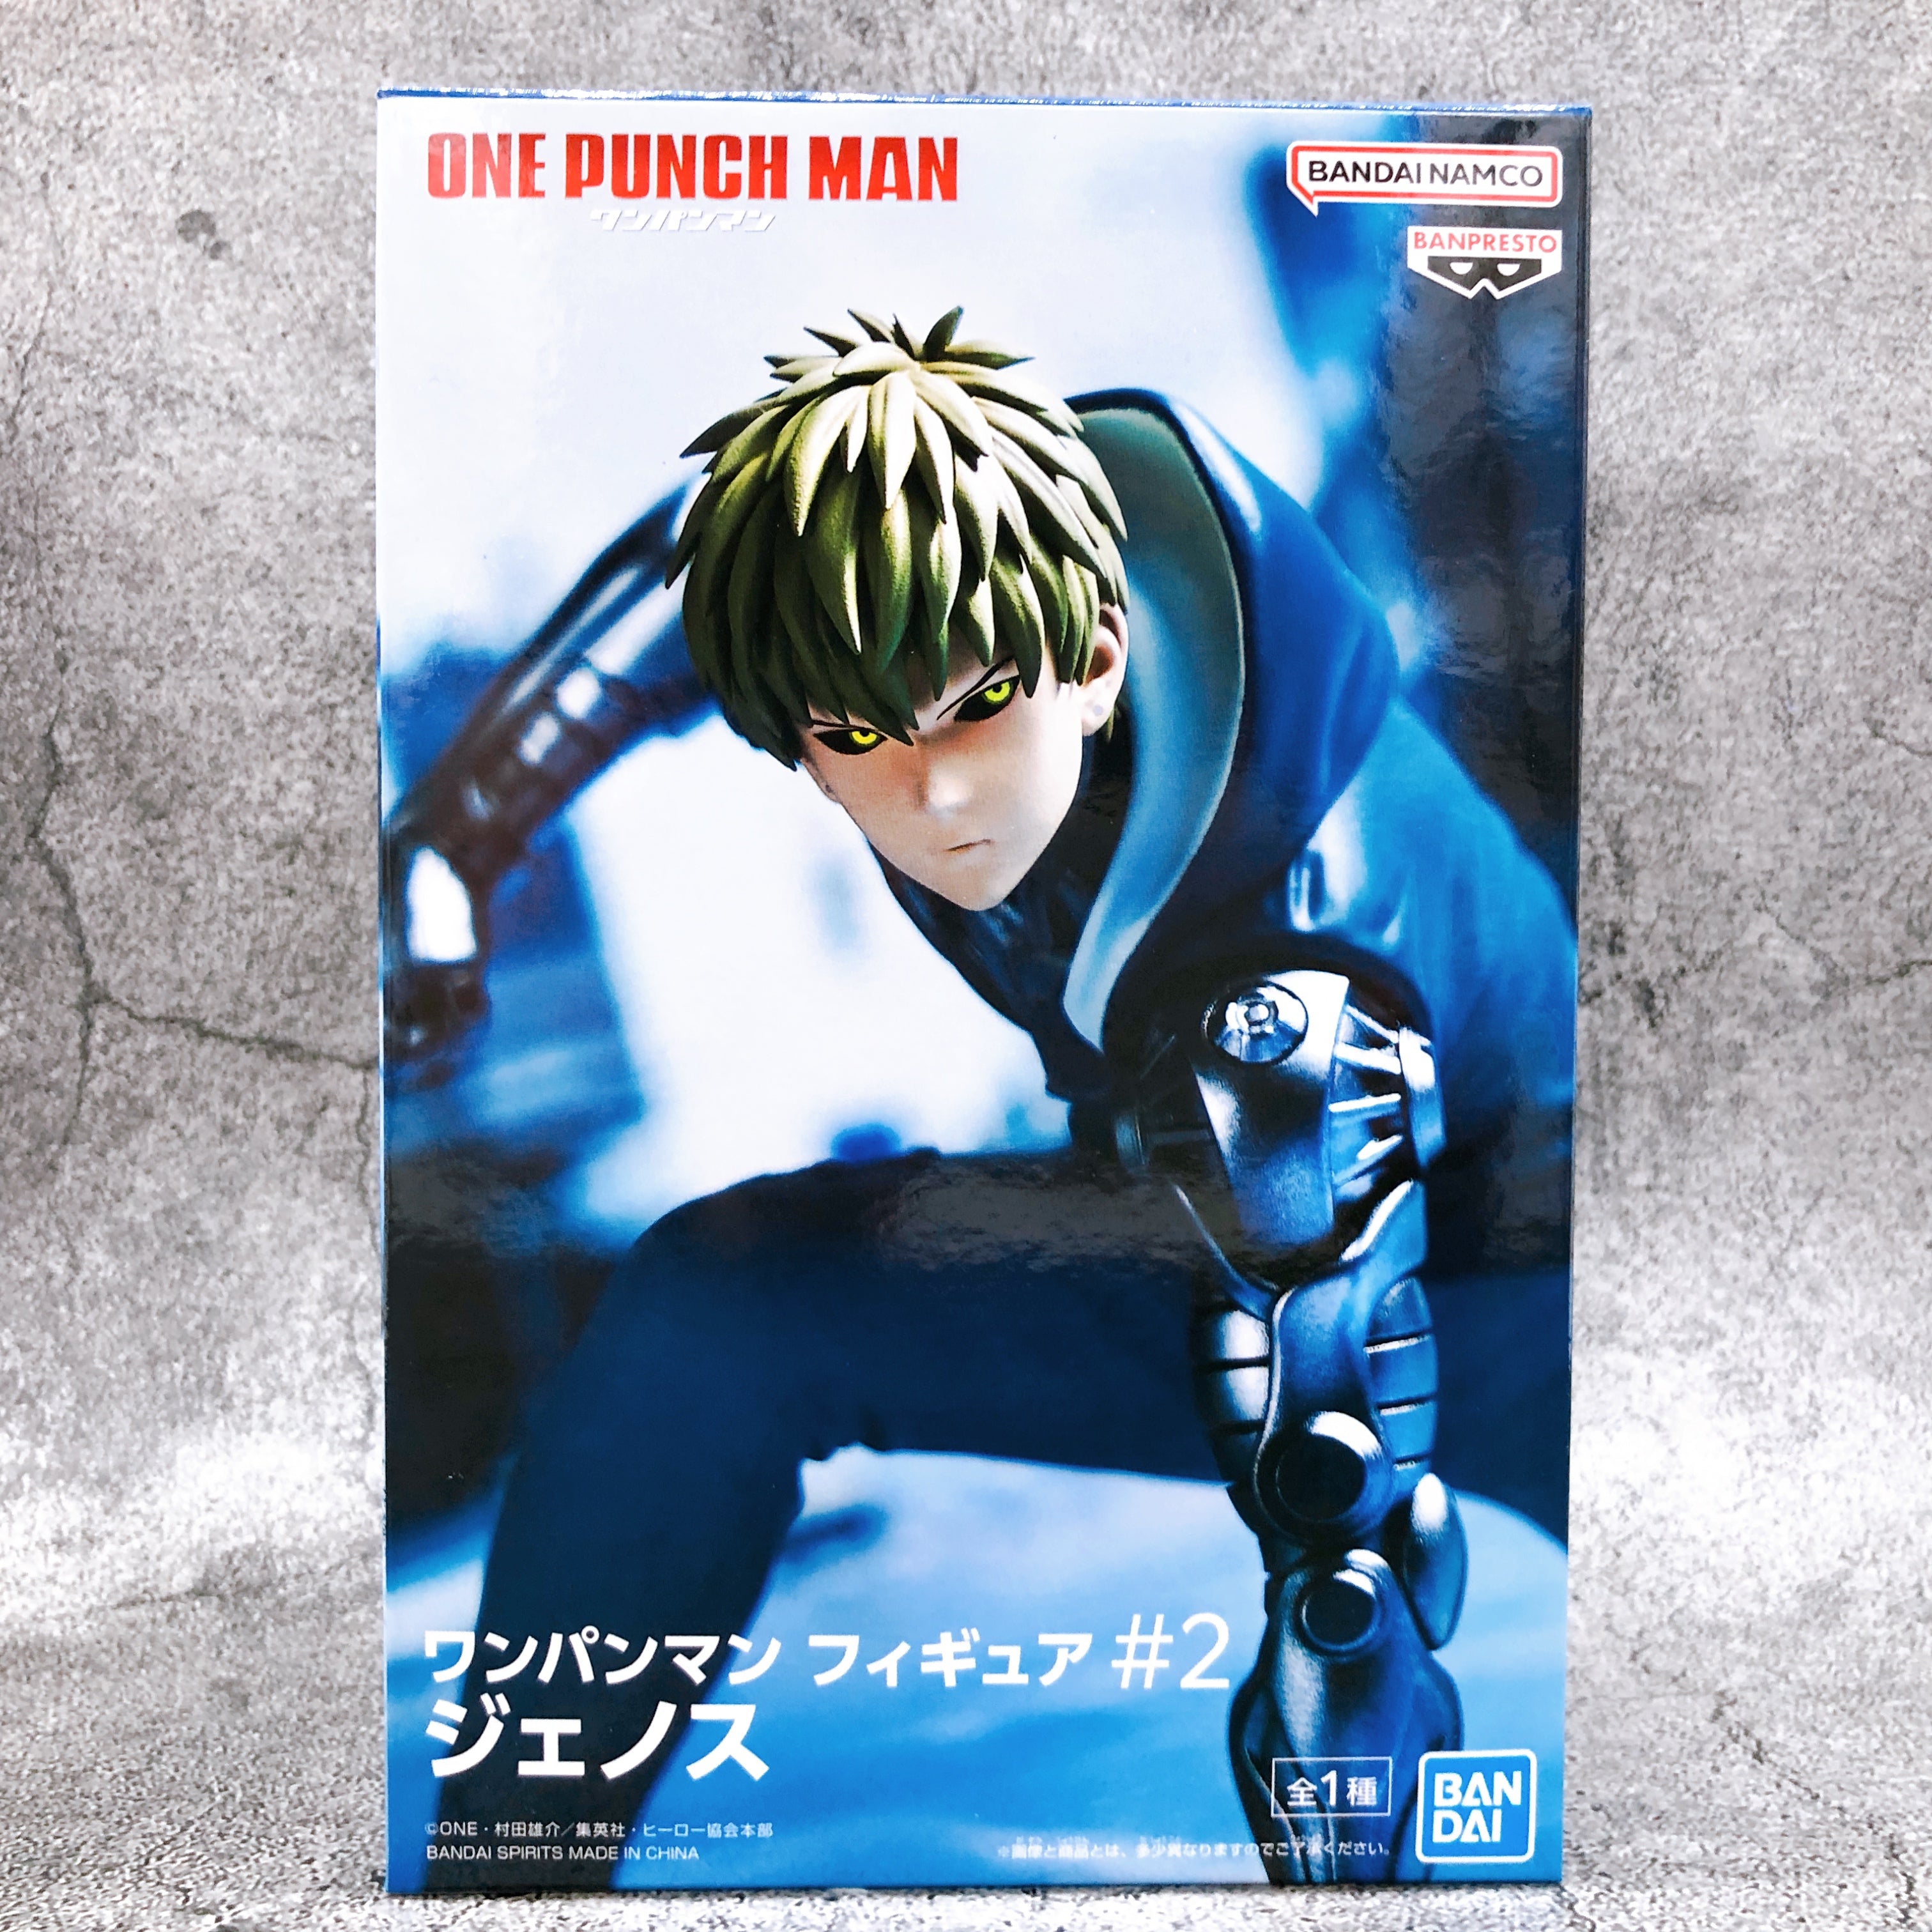 One Punch Man Saitama Figure - Figure #1 - Banpresto